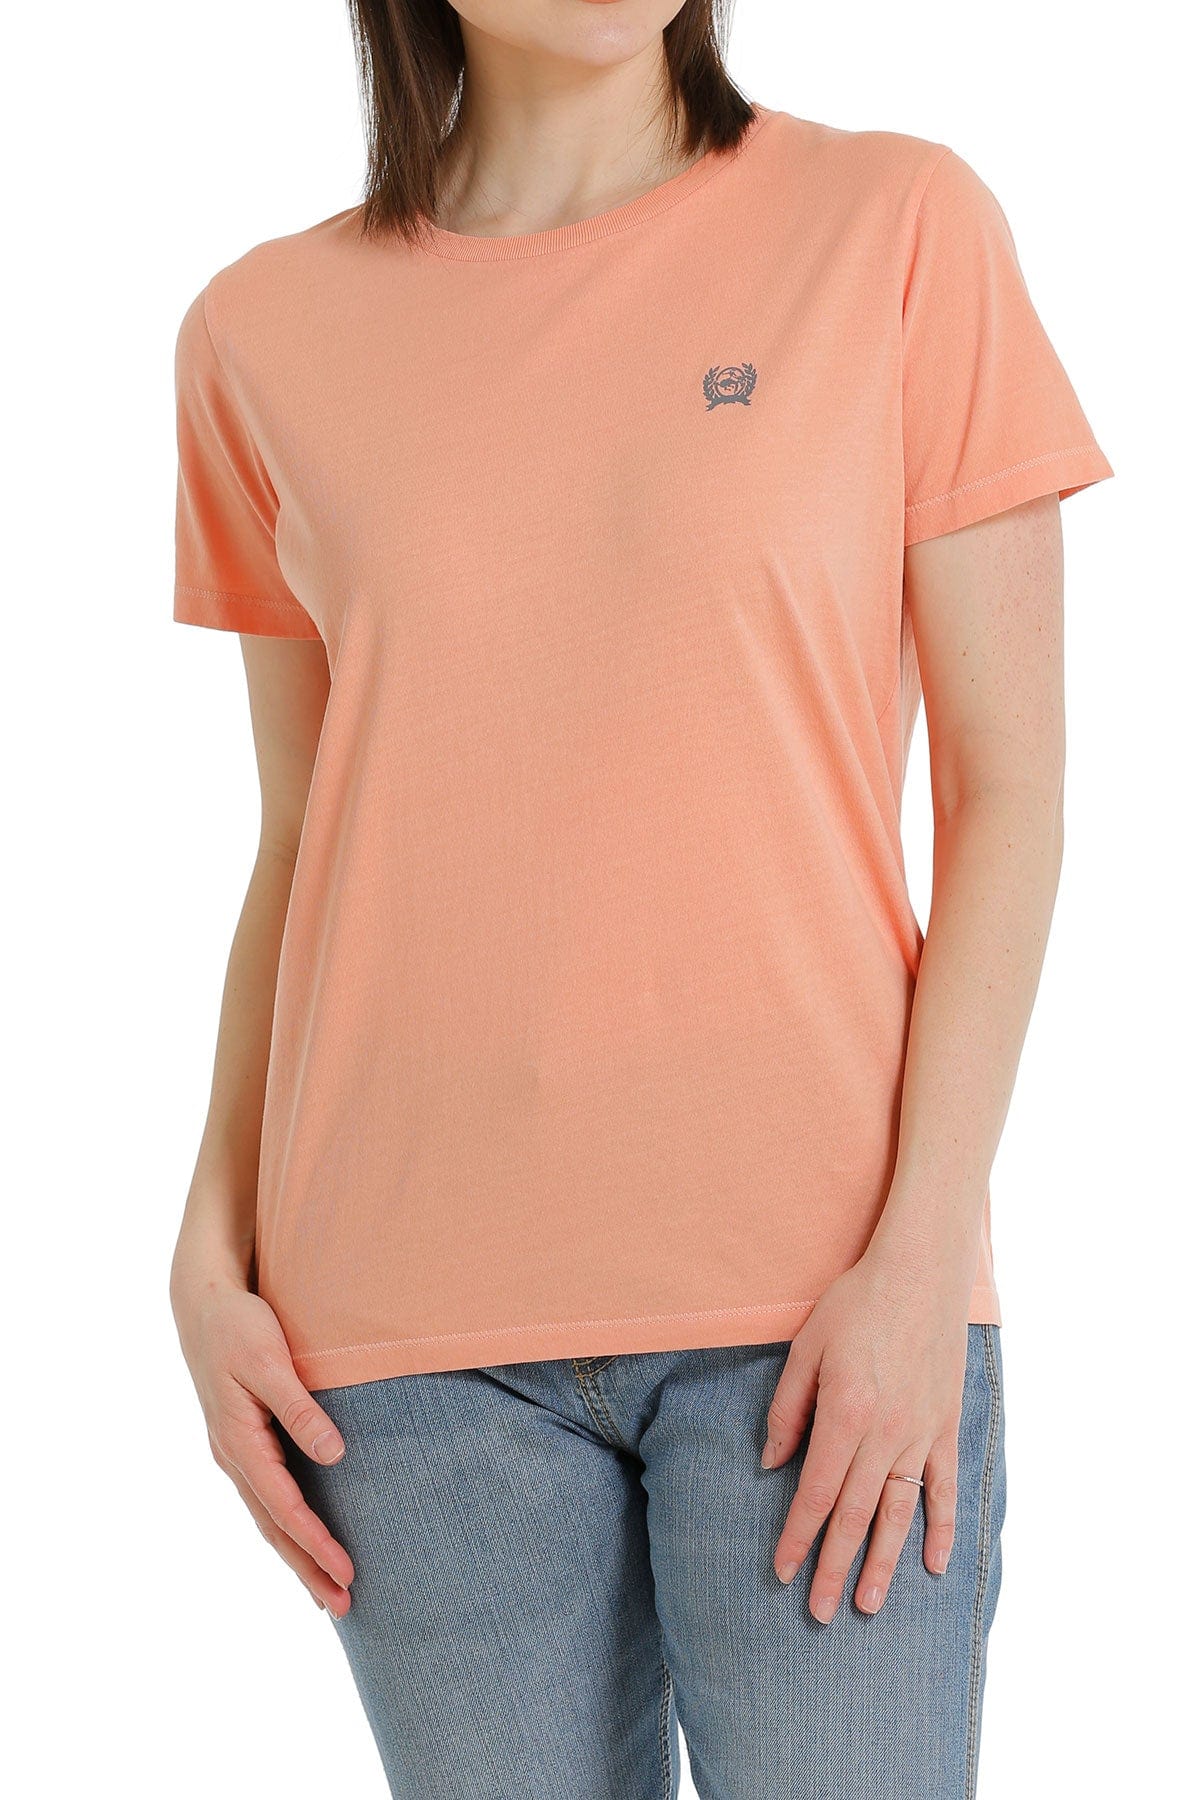 CINCH Shirts Cinch Women's  Rodeo Brand Coral Tee MSK7901001